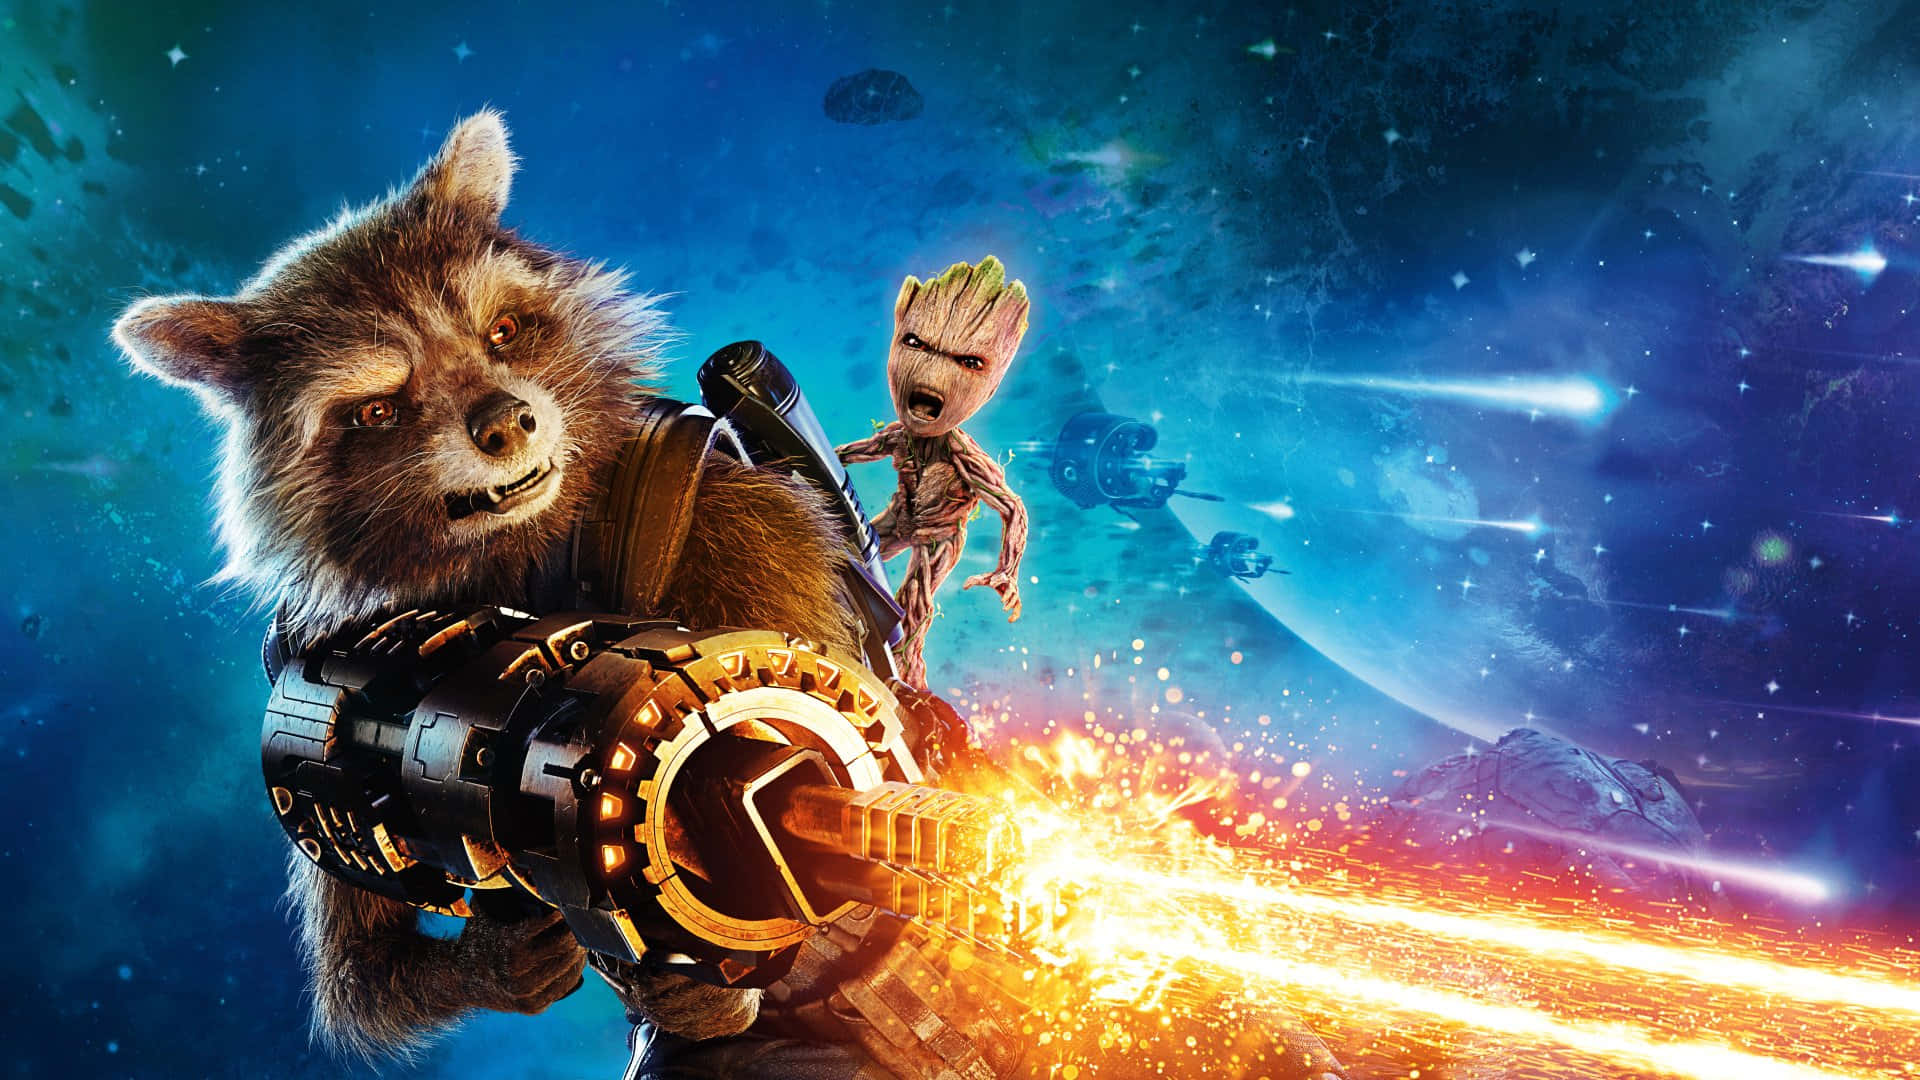 Guardians Of The Galaxy - Rocket Raccoon Wallpaper